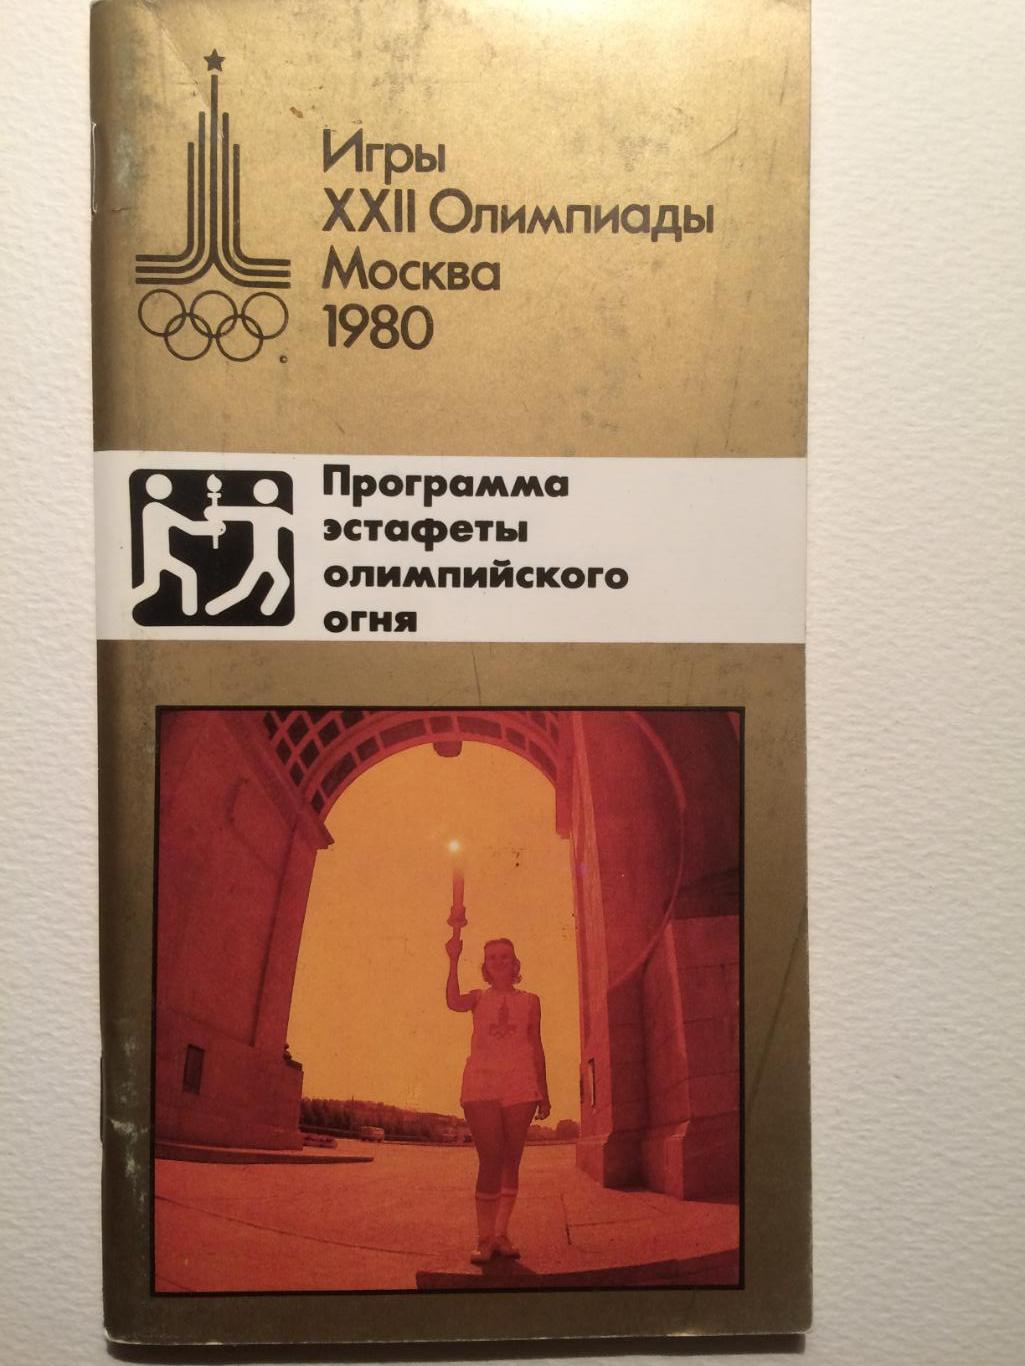 Олимпиада-1980 Олимпийские игры Москва-80 Эстафета олимпийского огня